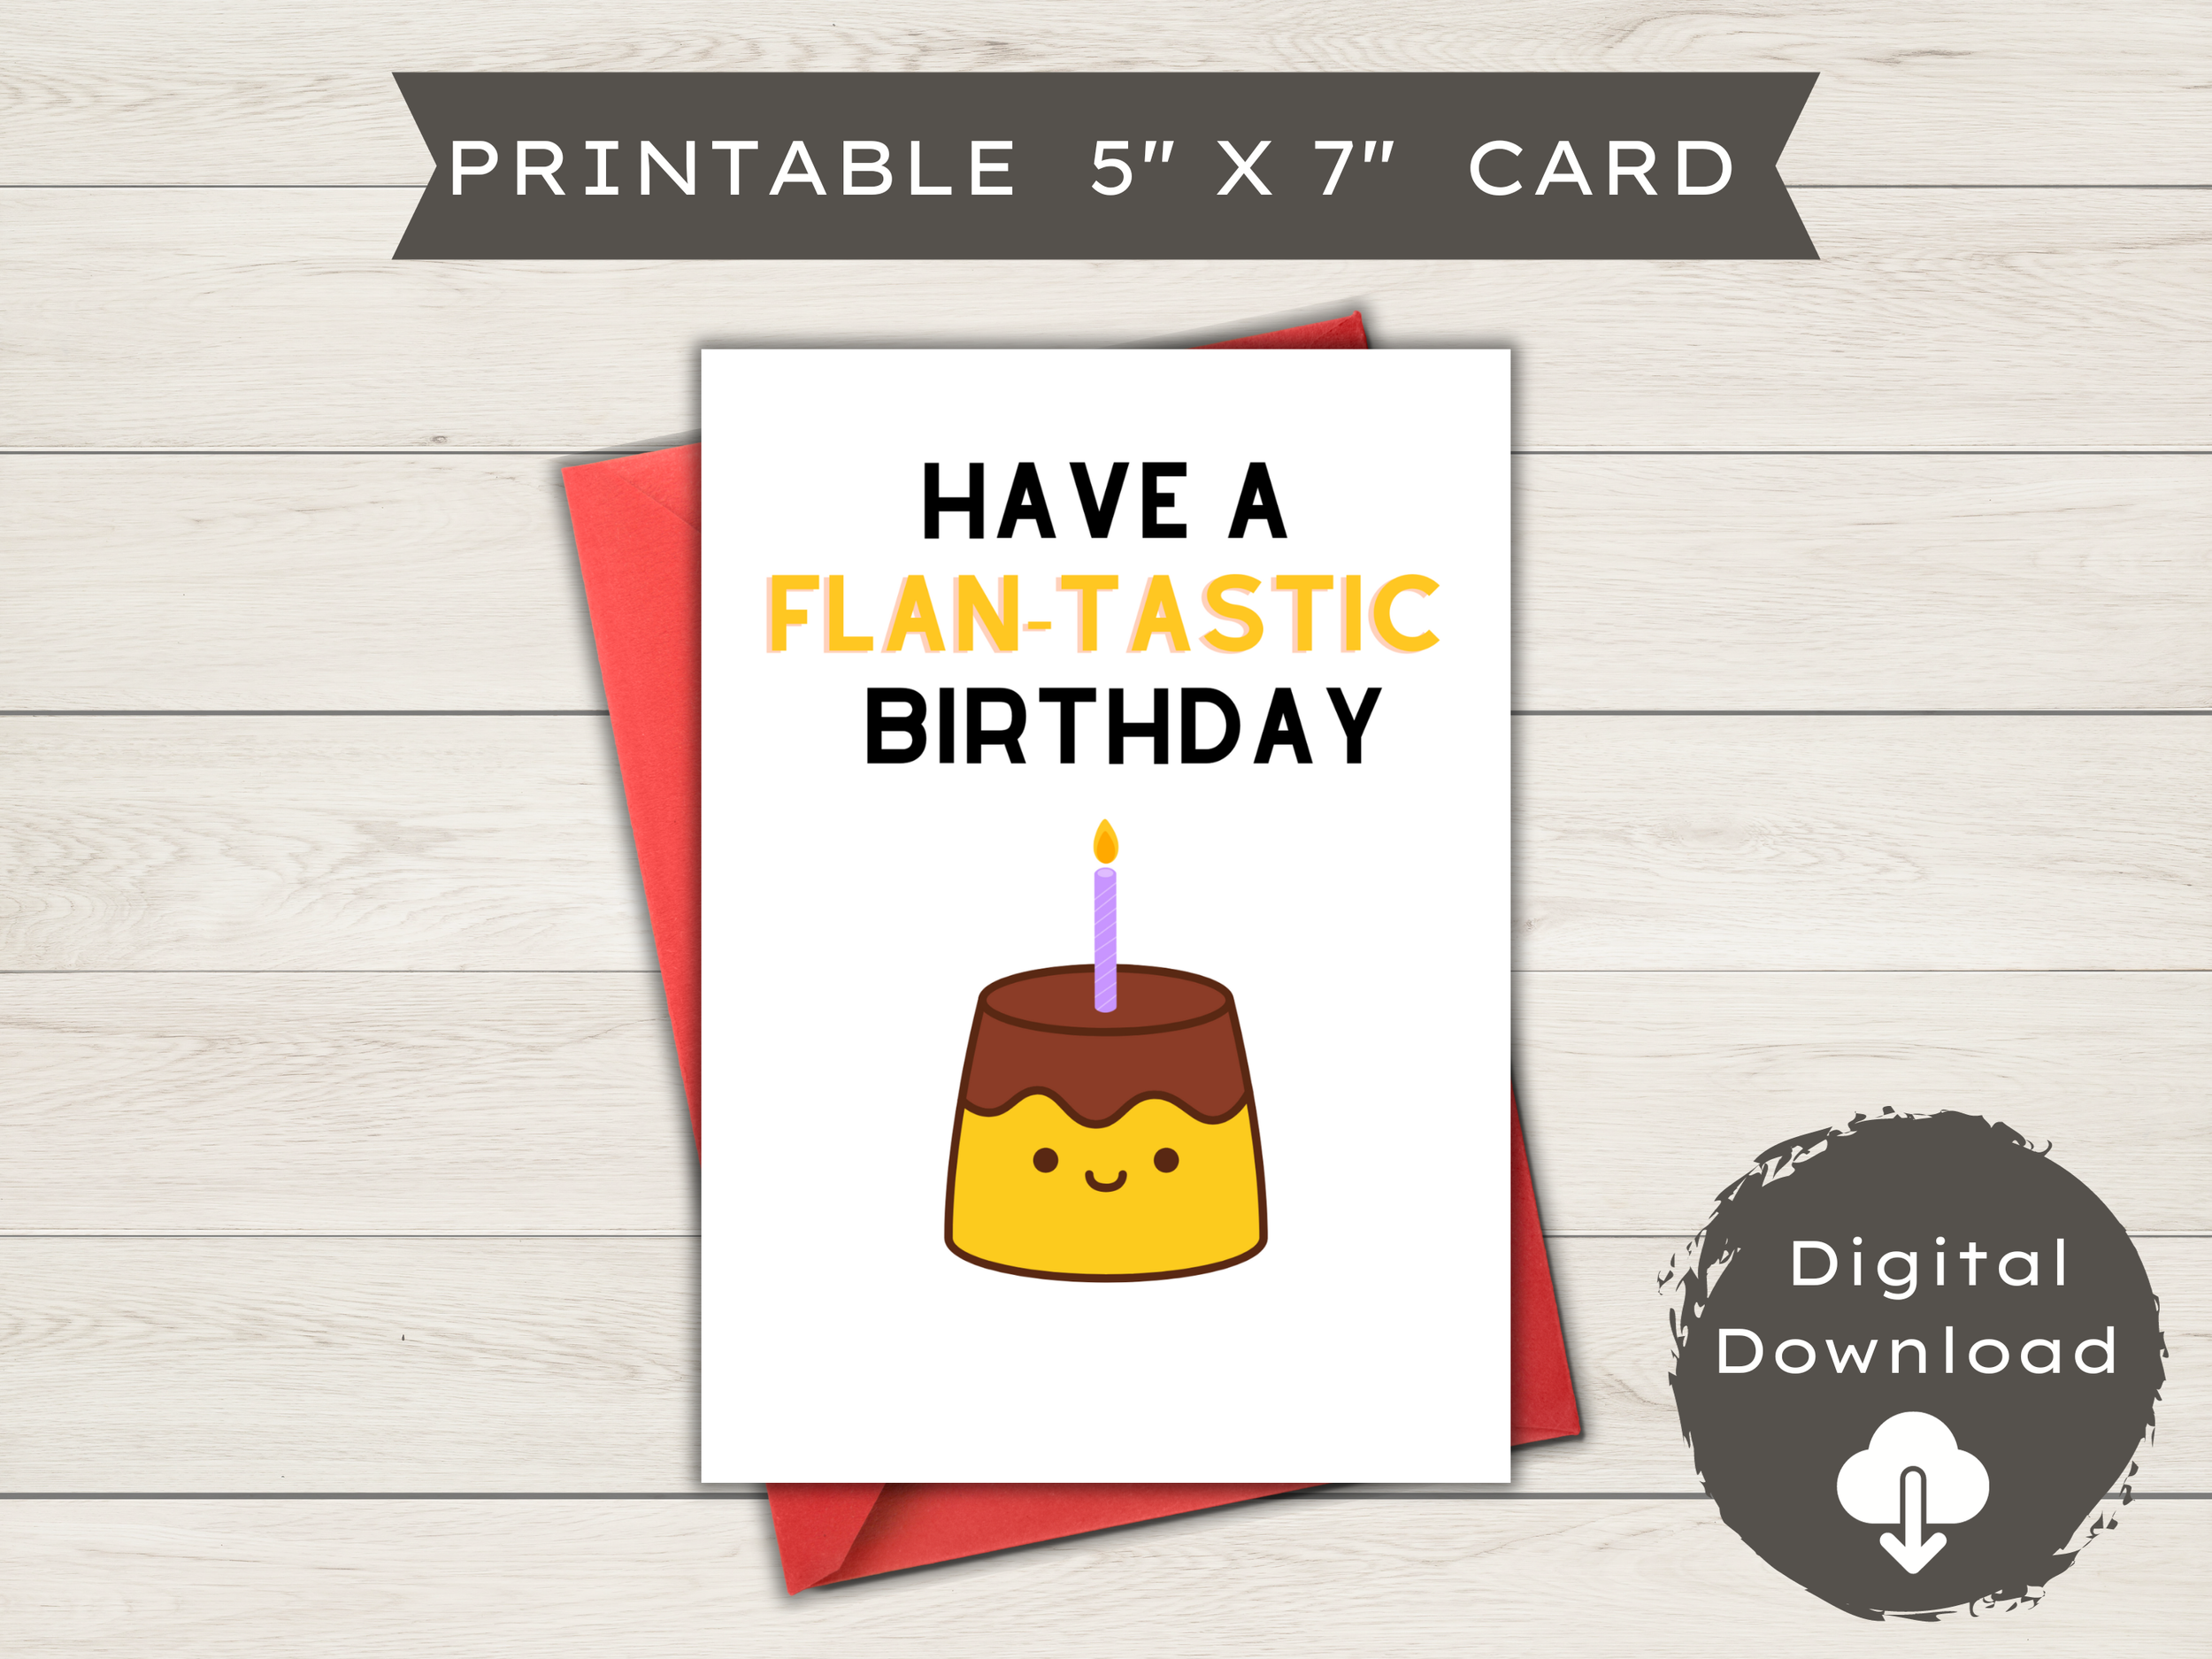 Printable Birthday Card - Have a Flan-tastic Birthday